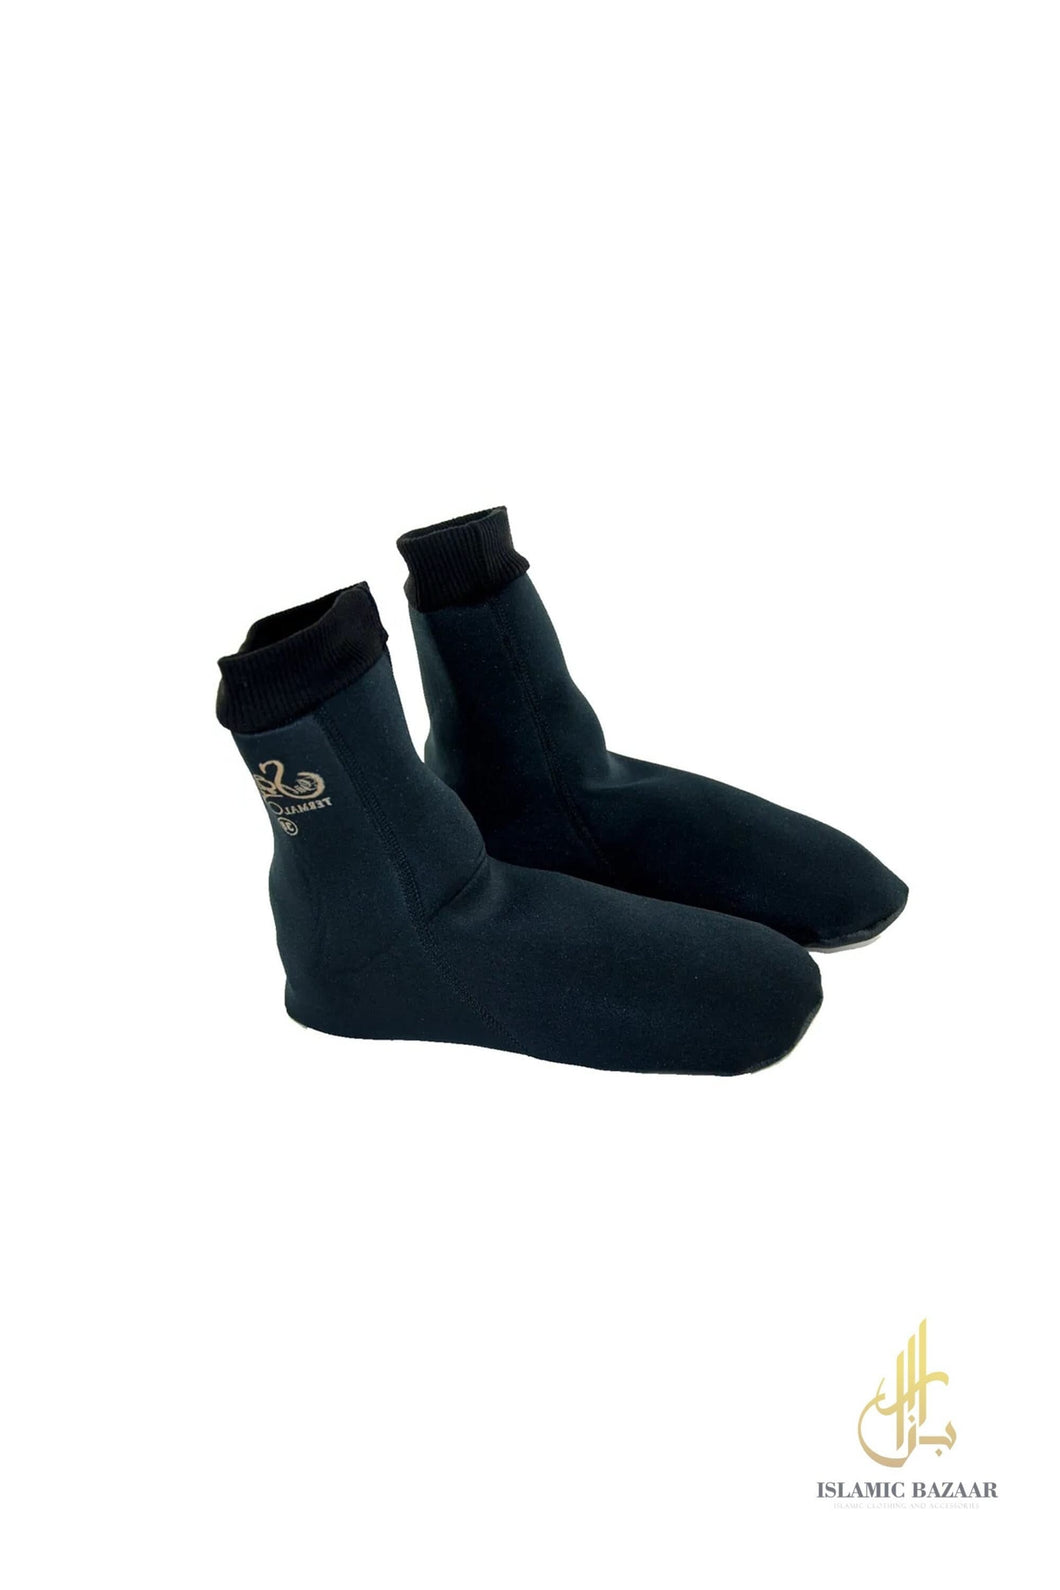 Thermal Khuffain Socks with Leather Soles, House Slippers, Womens Camping Socks, Wudhu Socks, Home Slippers, Sunnah Masah Zipperless Khuff